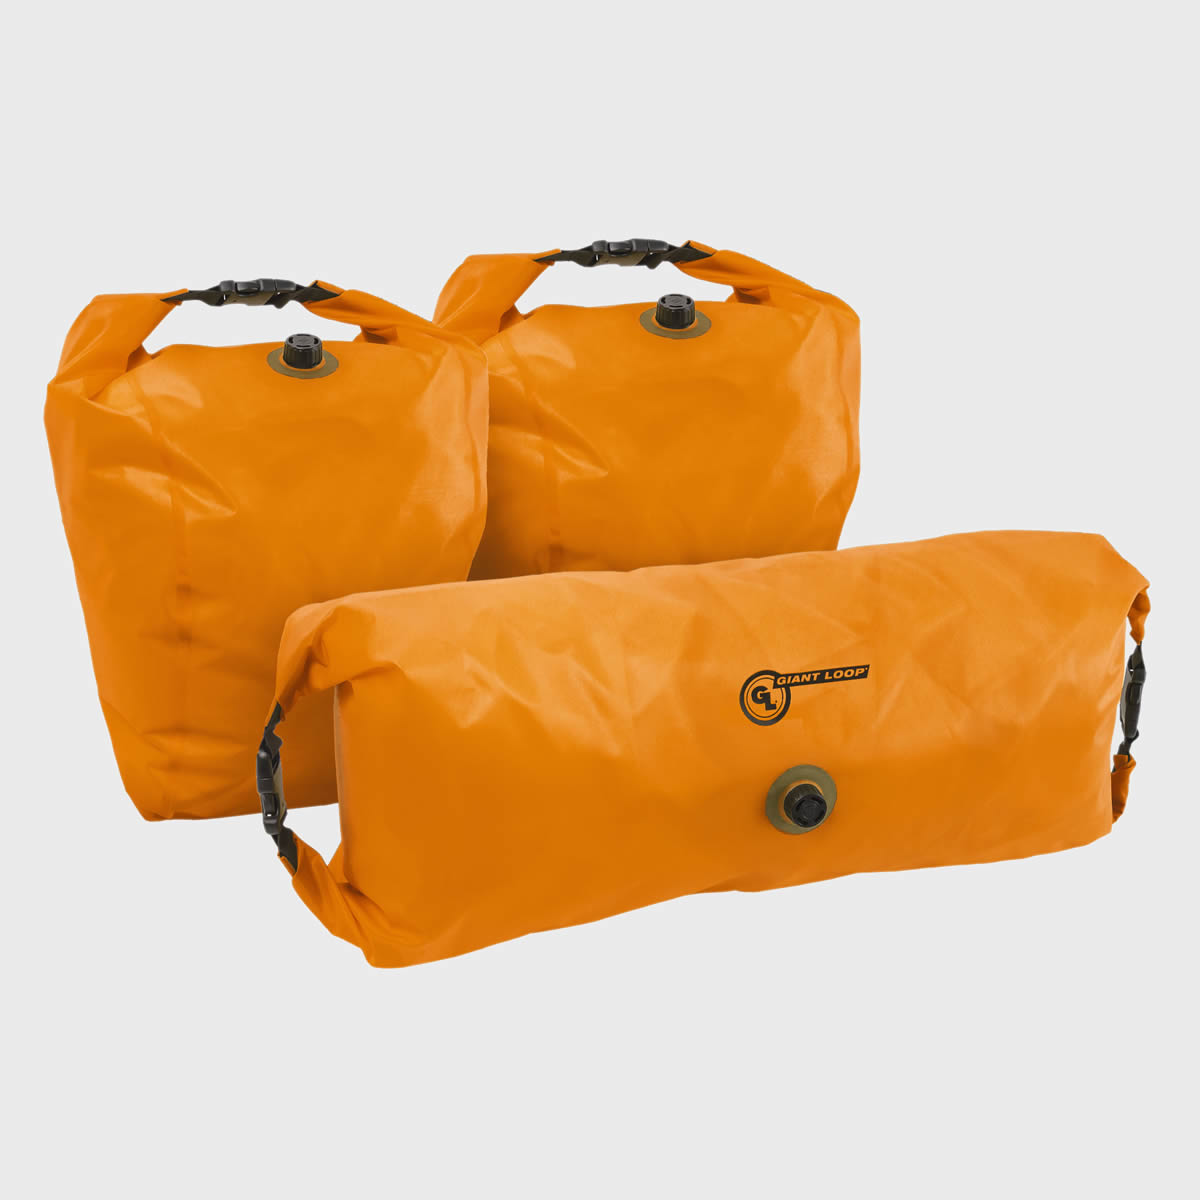 Sealed Air RF-3 Fill Air RF Inflatable Sealing Bags